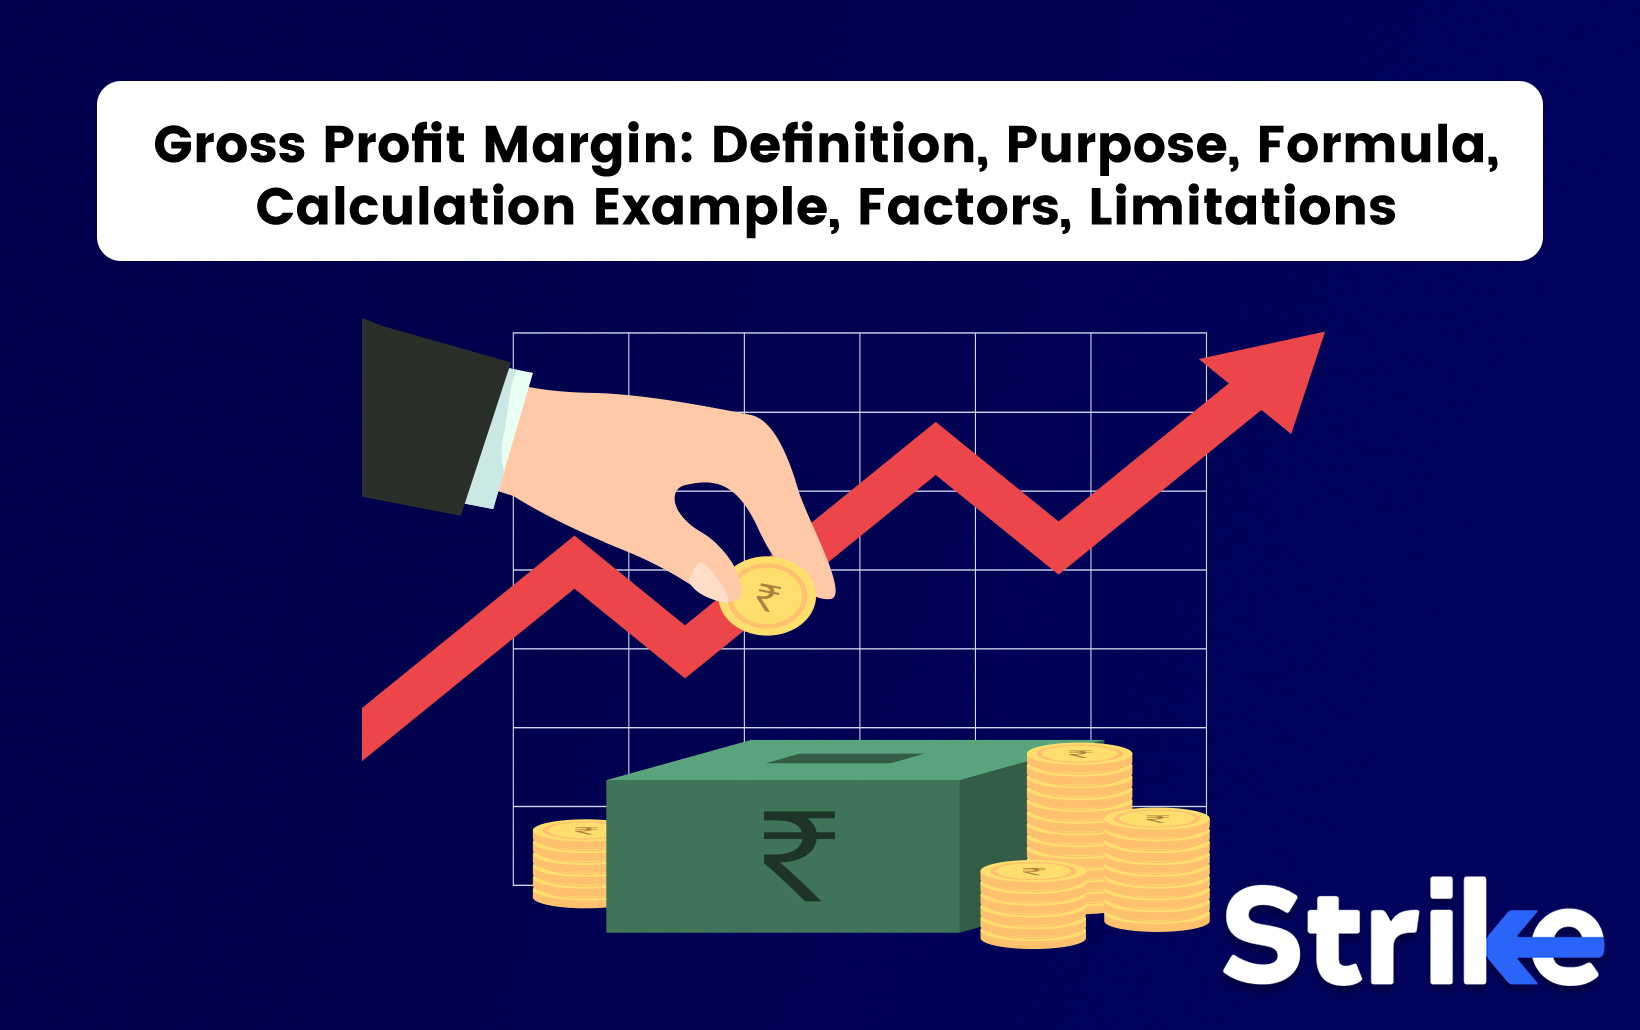 Gross Profit Margin: Definition, Purpose, Formula, Calculation Example, Factors, Limitations